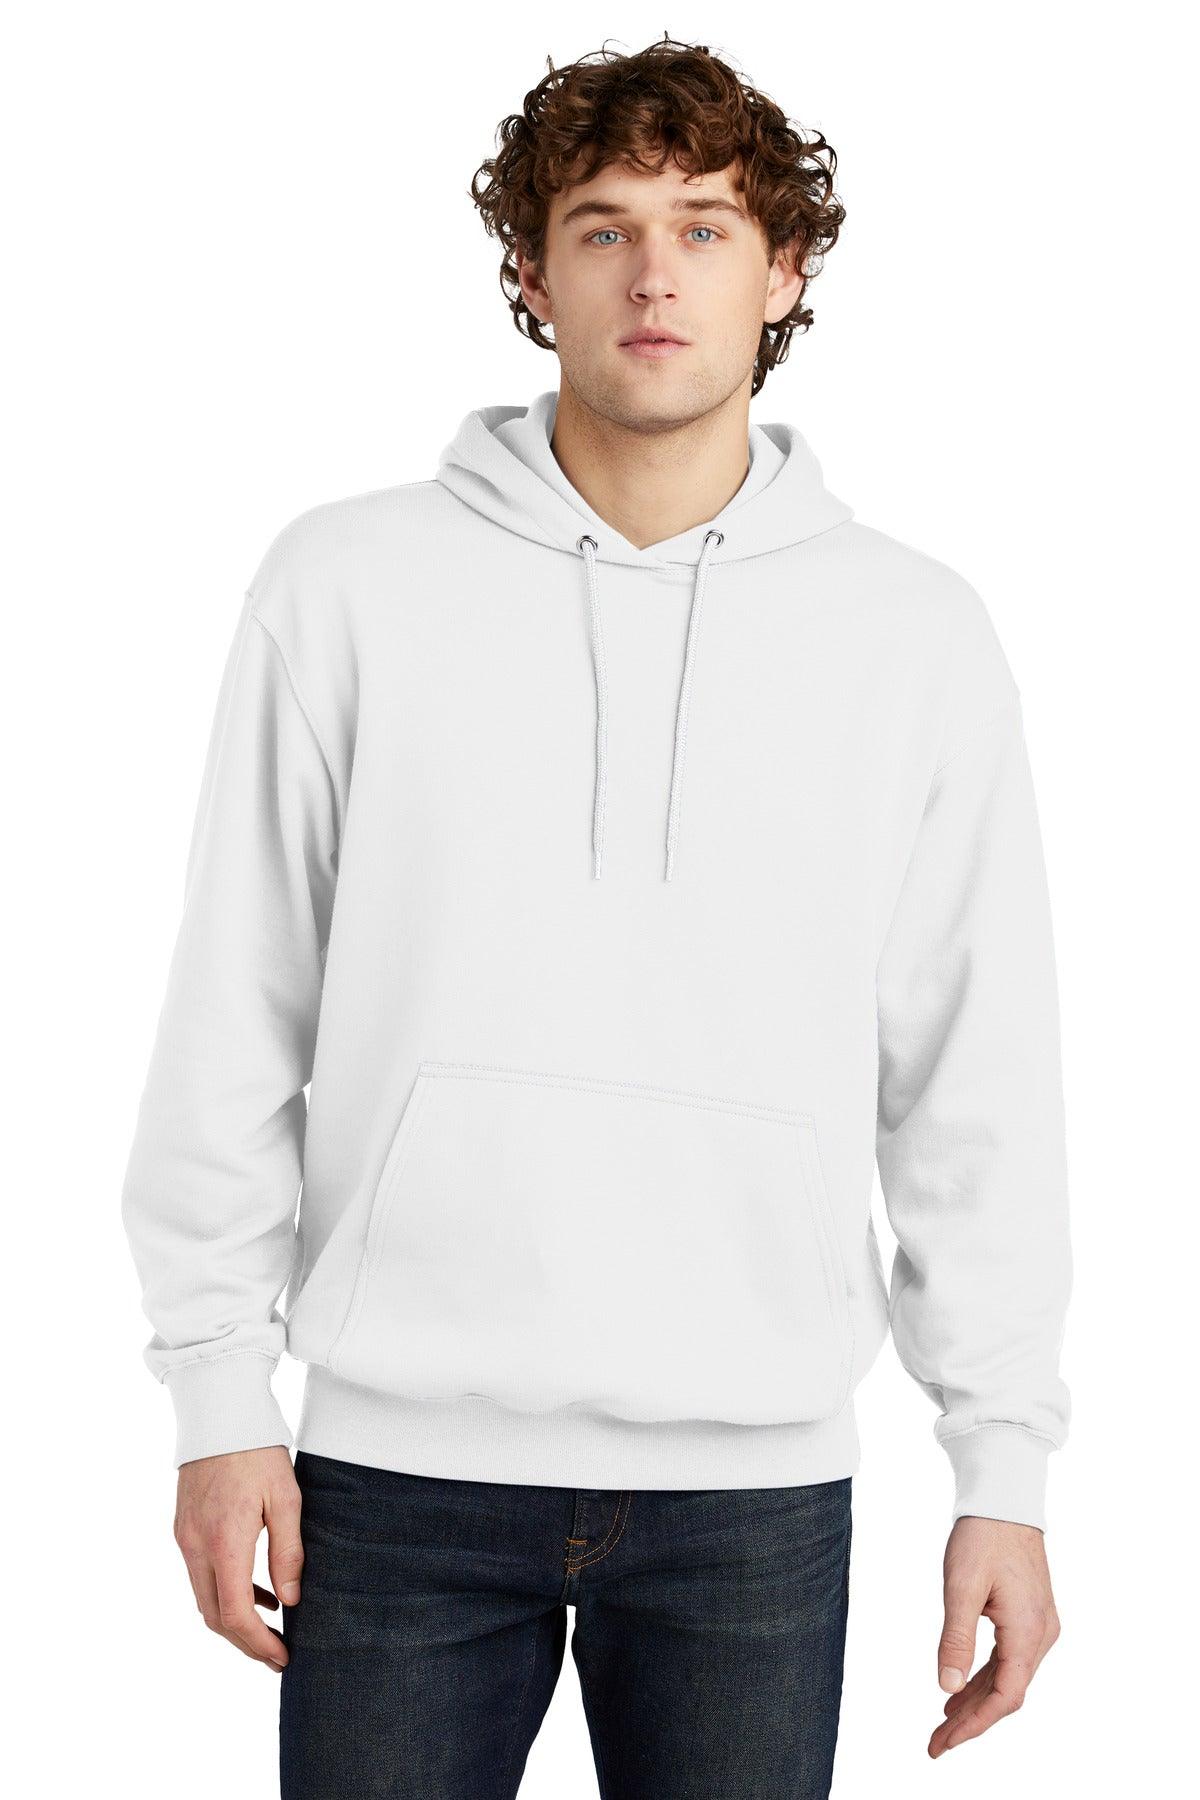 Port & Company Fleece Pullover Hooded Sweatshirt PC79H - Dresses Max